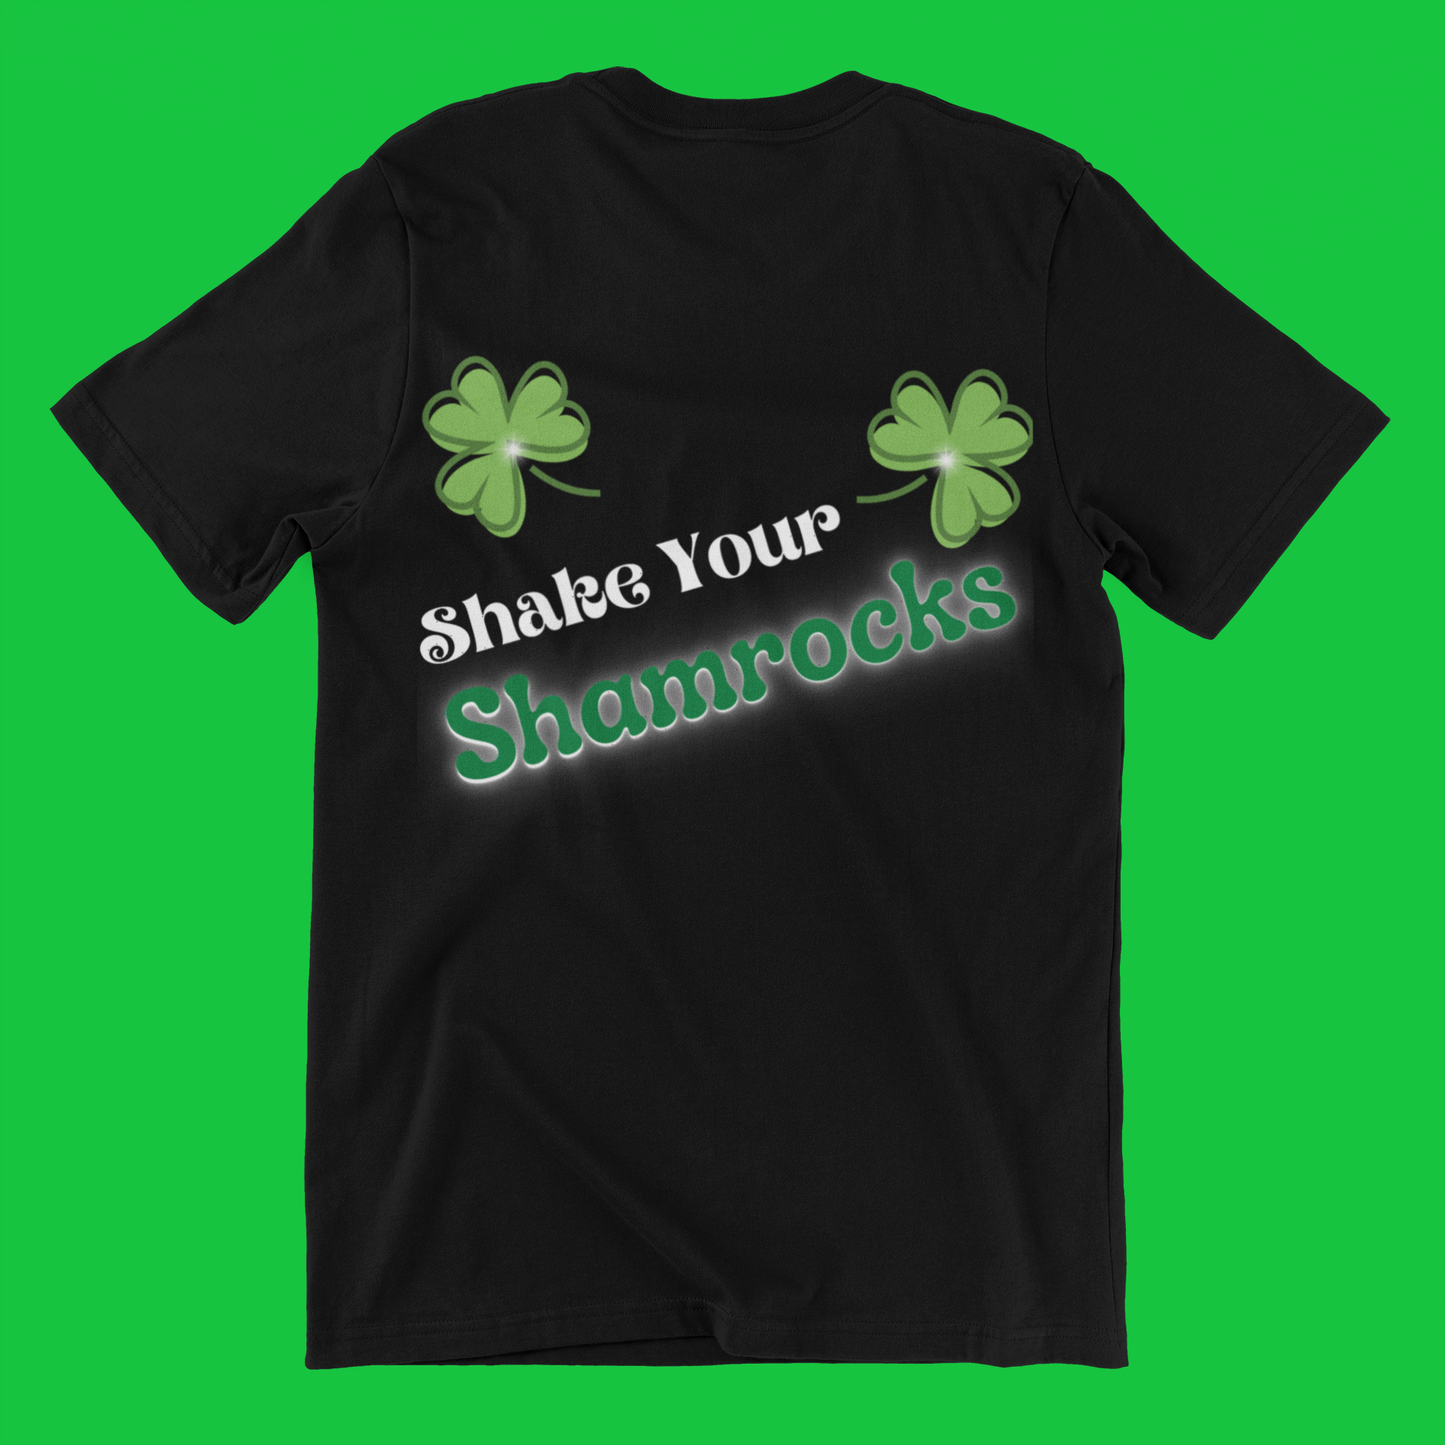 EXCLUSIVE St Patricks Day Tee - Shake Your Shamrocks